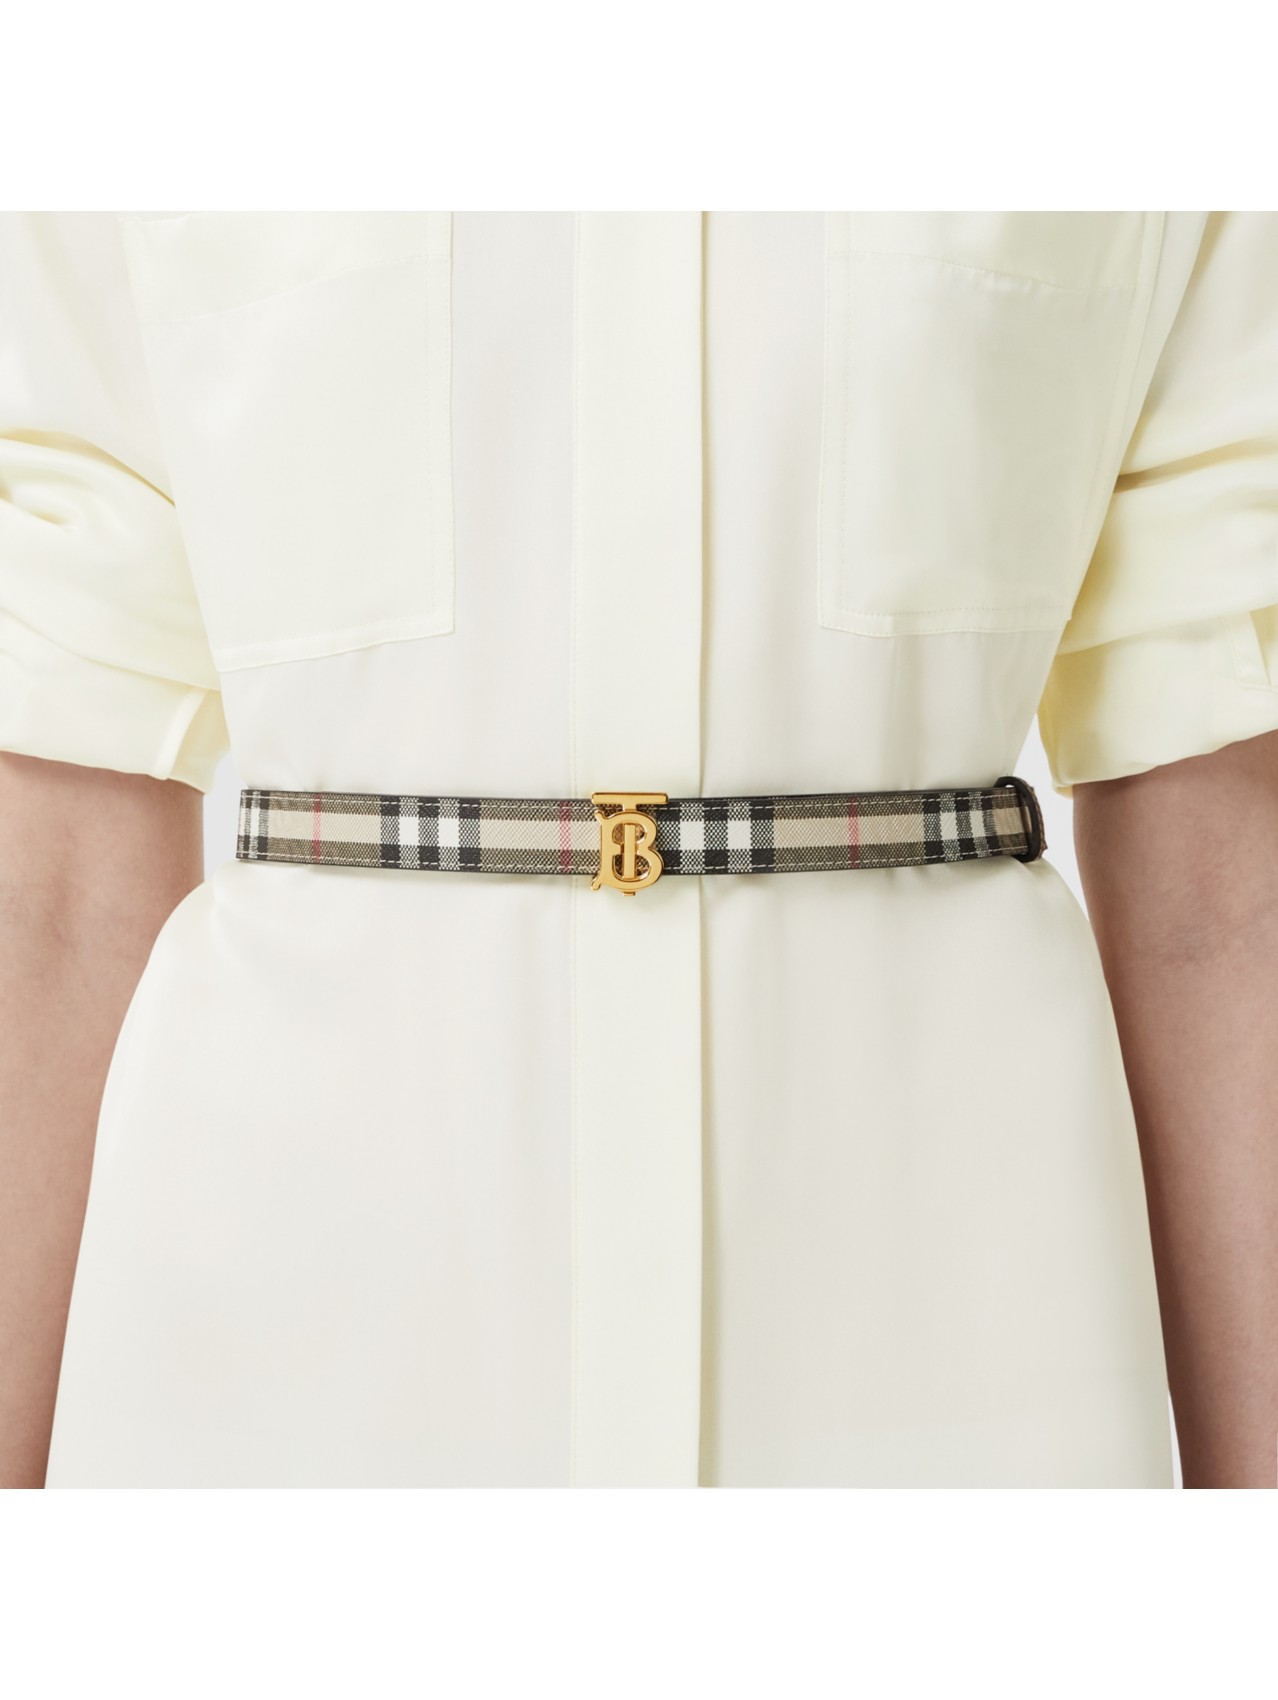 Designer Ladies Belt Cheapest Collection, Save 43% 